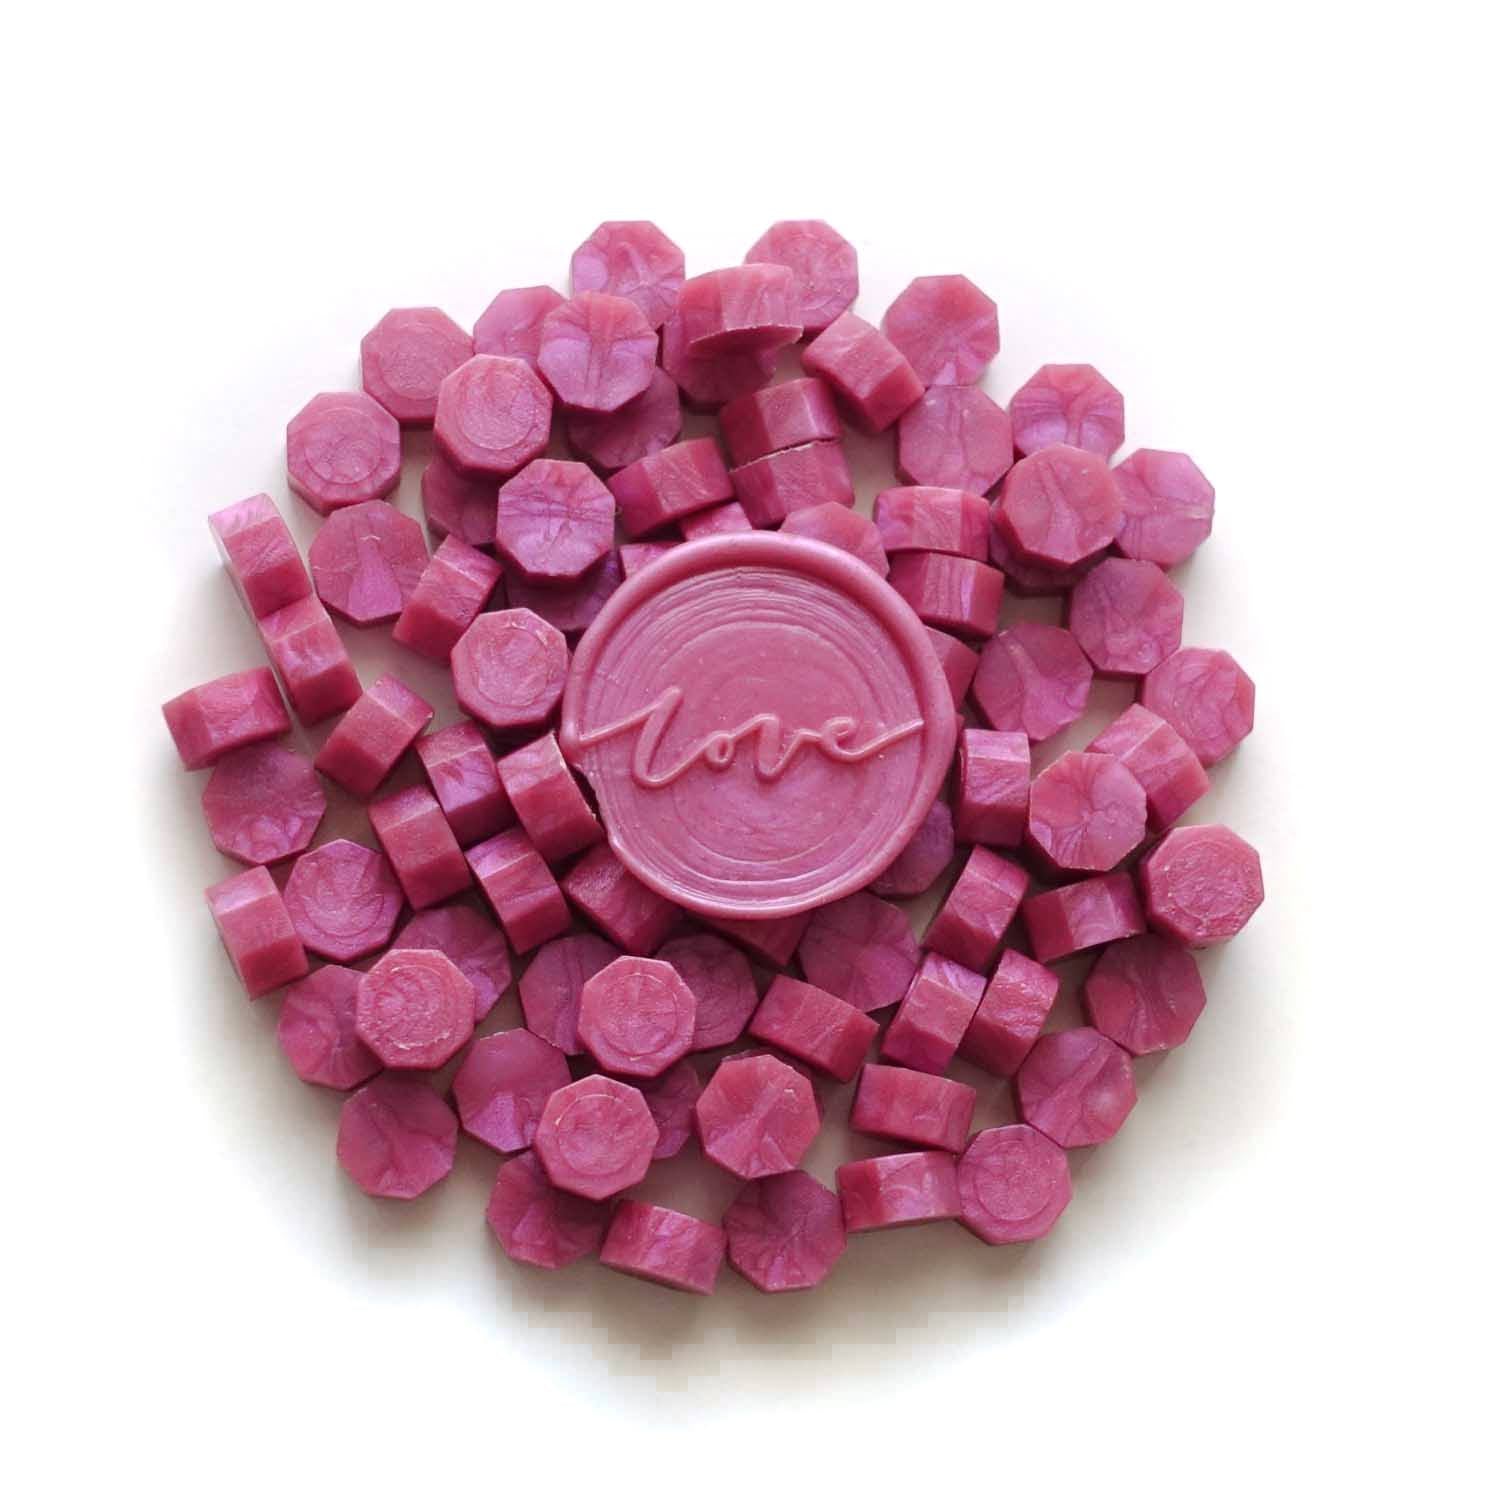 fuchsia hot bright pink sealing wax beads with love wax seal australia